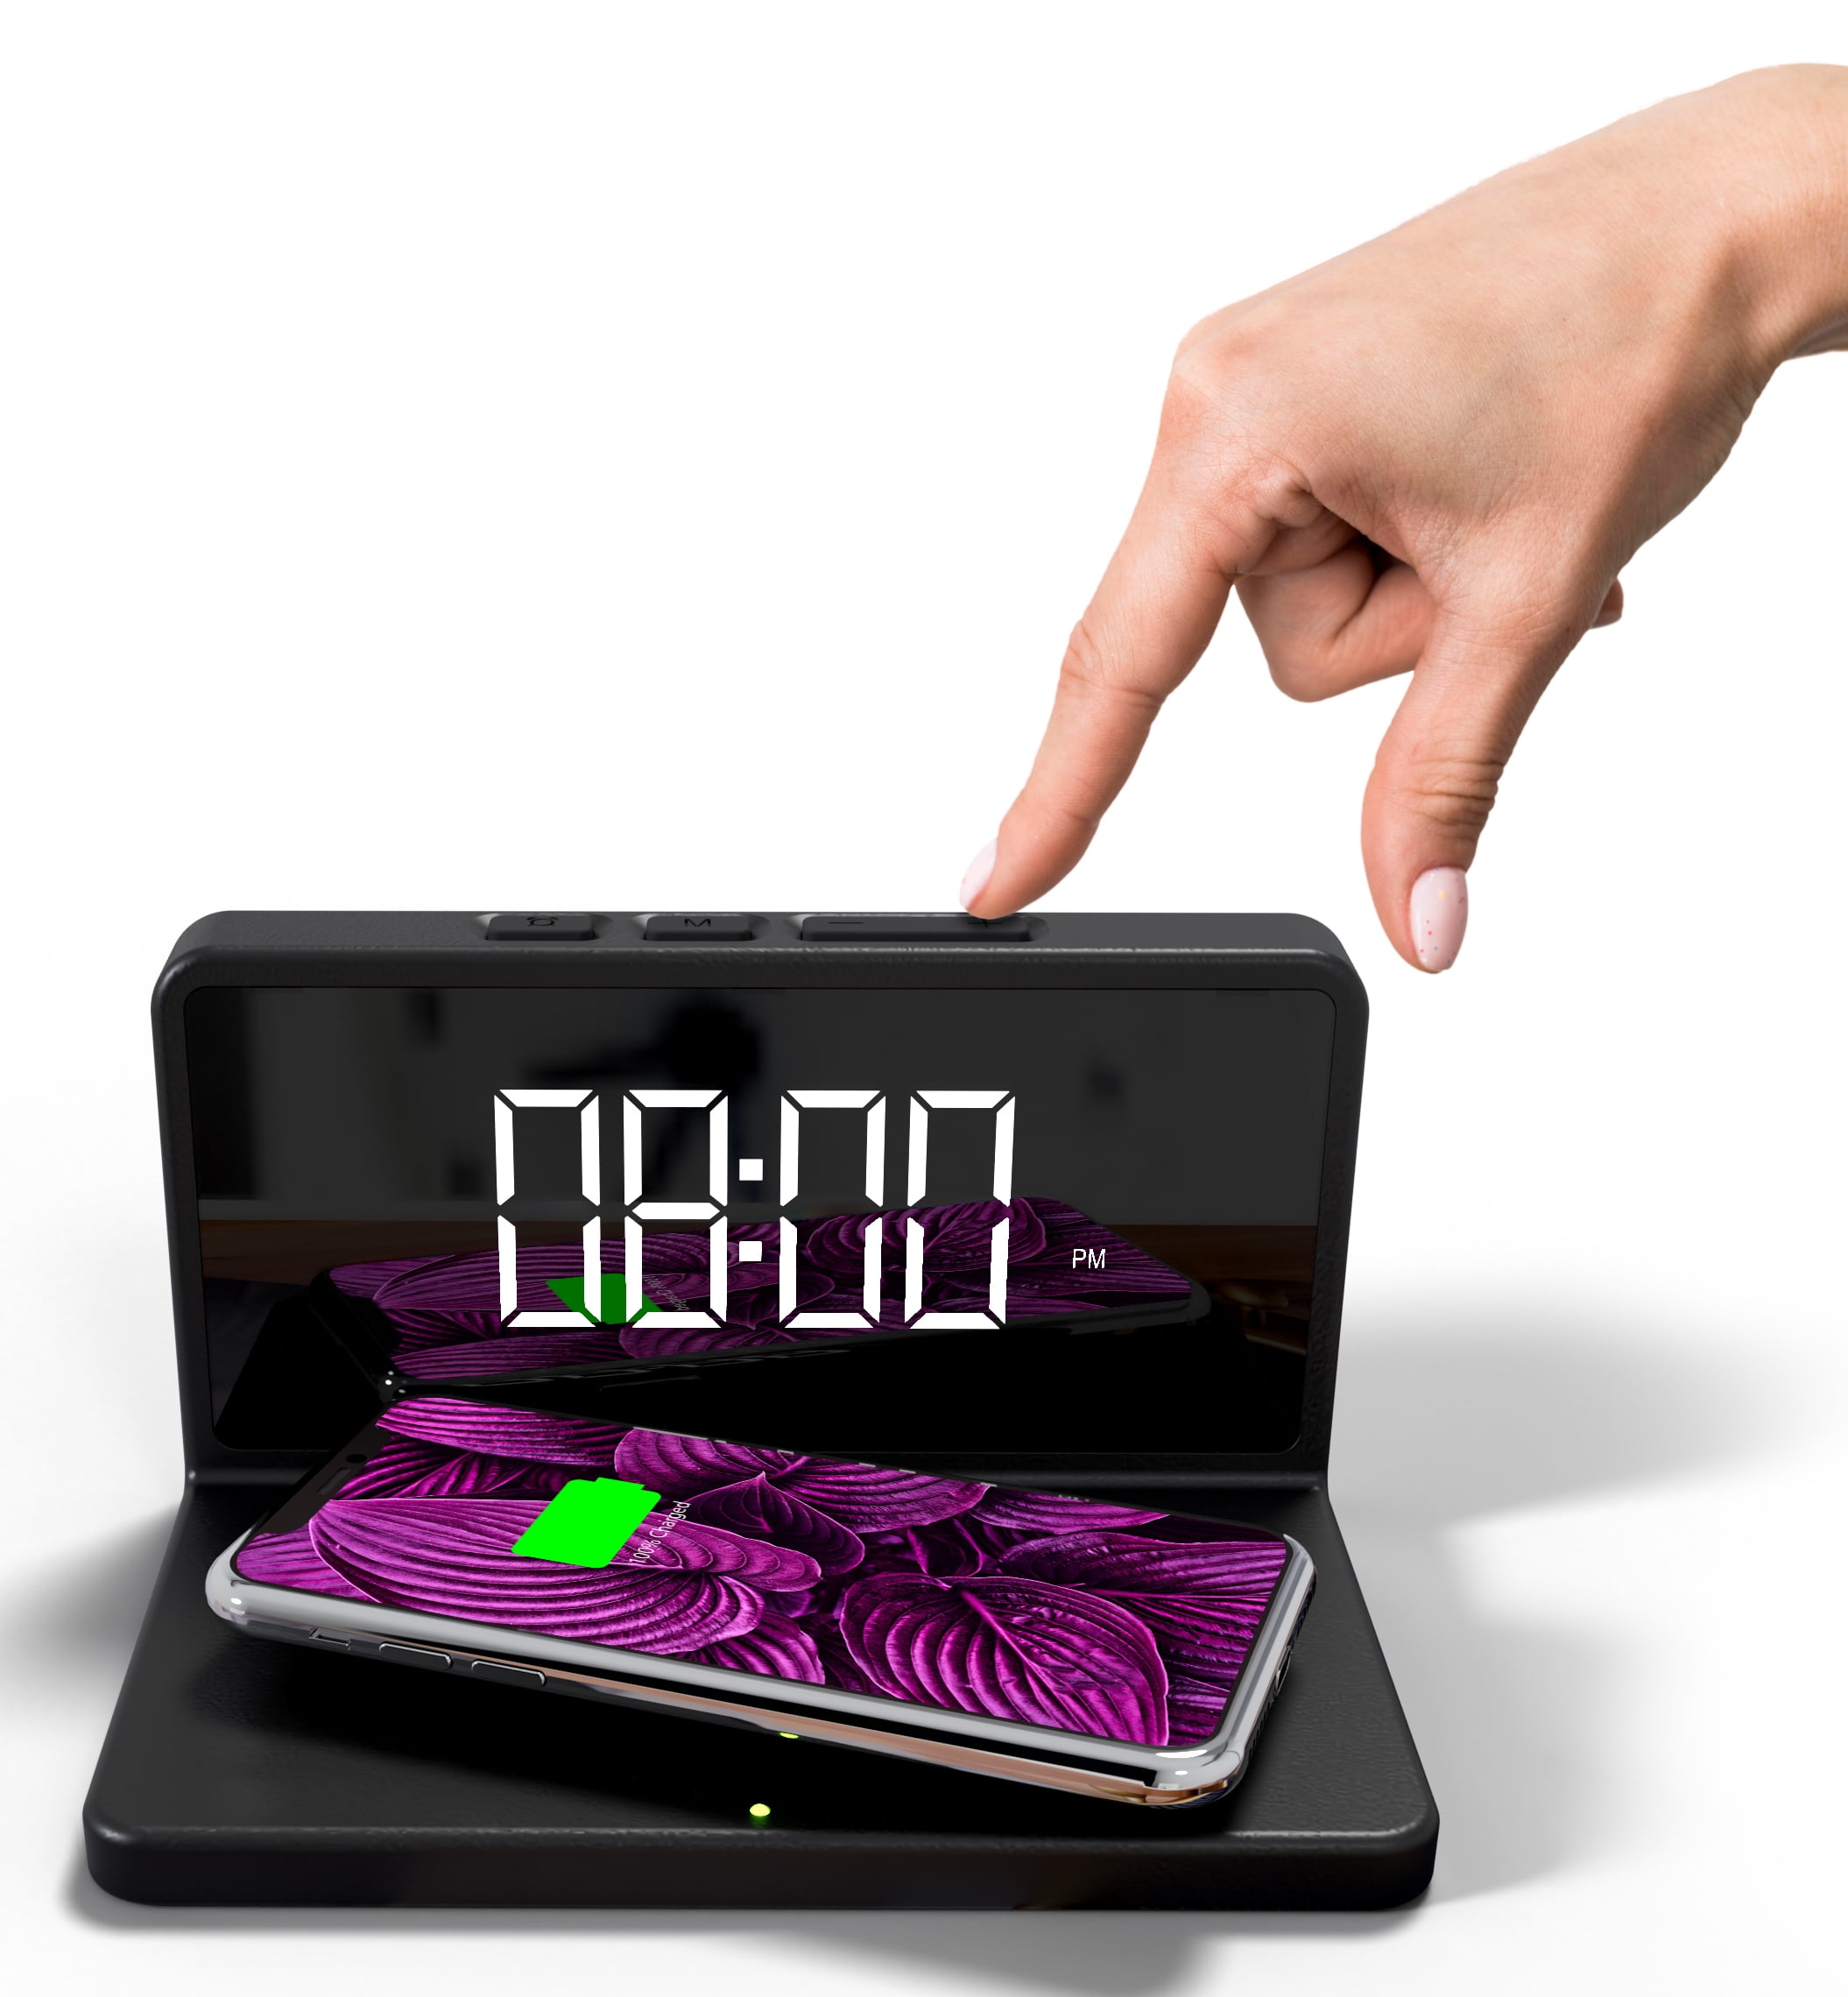 Premier LED Alarm Clock, Wireless Phone Charger for Countertop, Desk, Bedside Table, Black